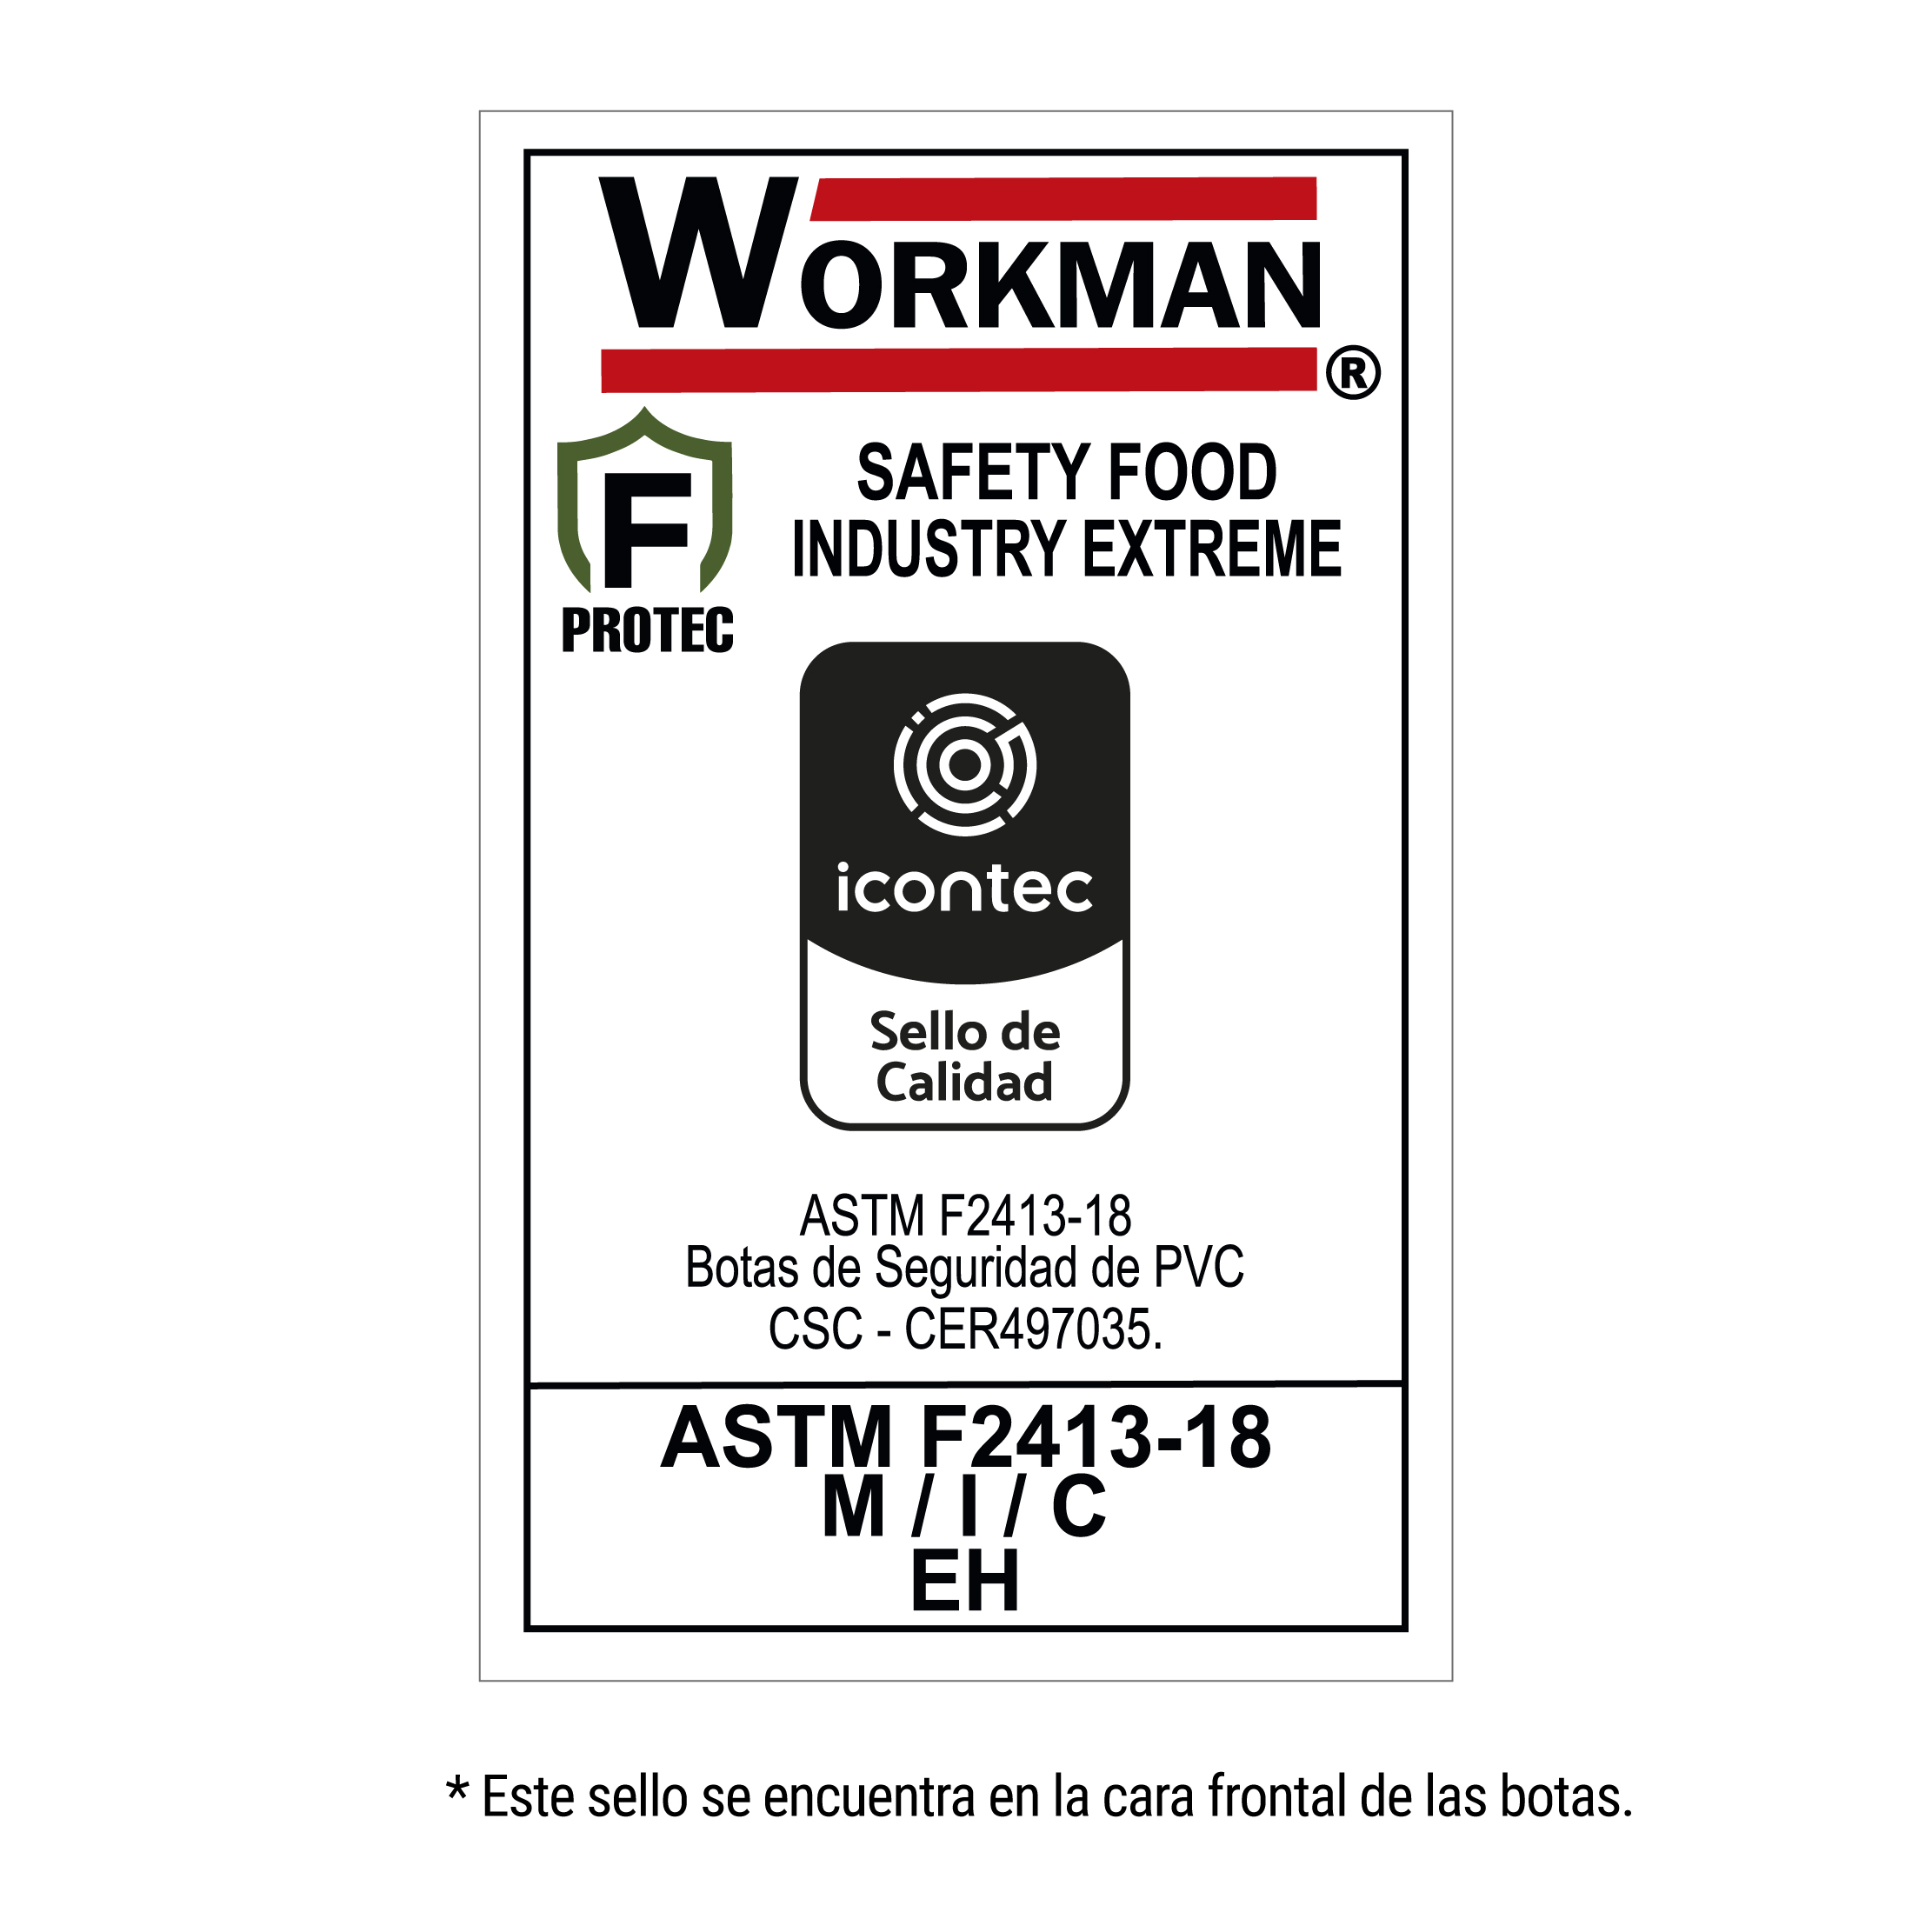 Workman Safety Food Industry Extreme Amarilla